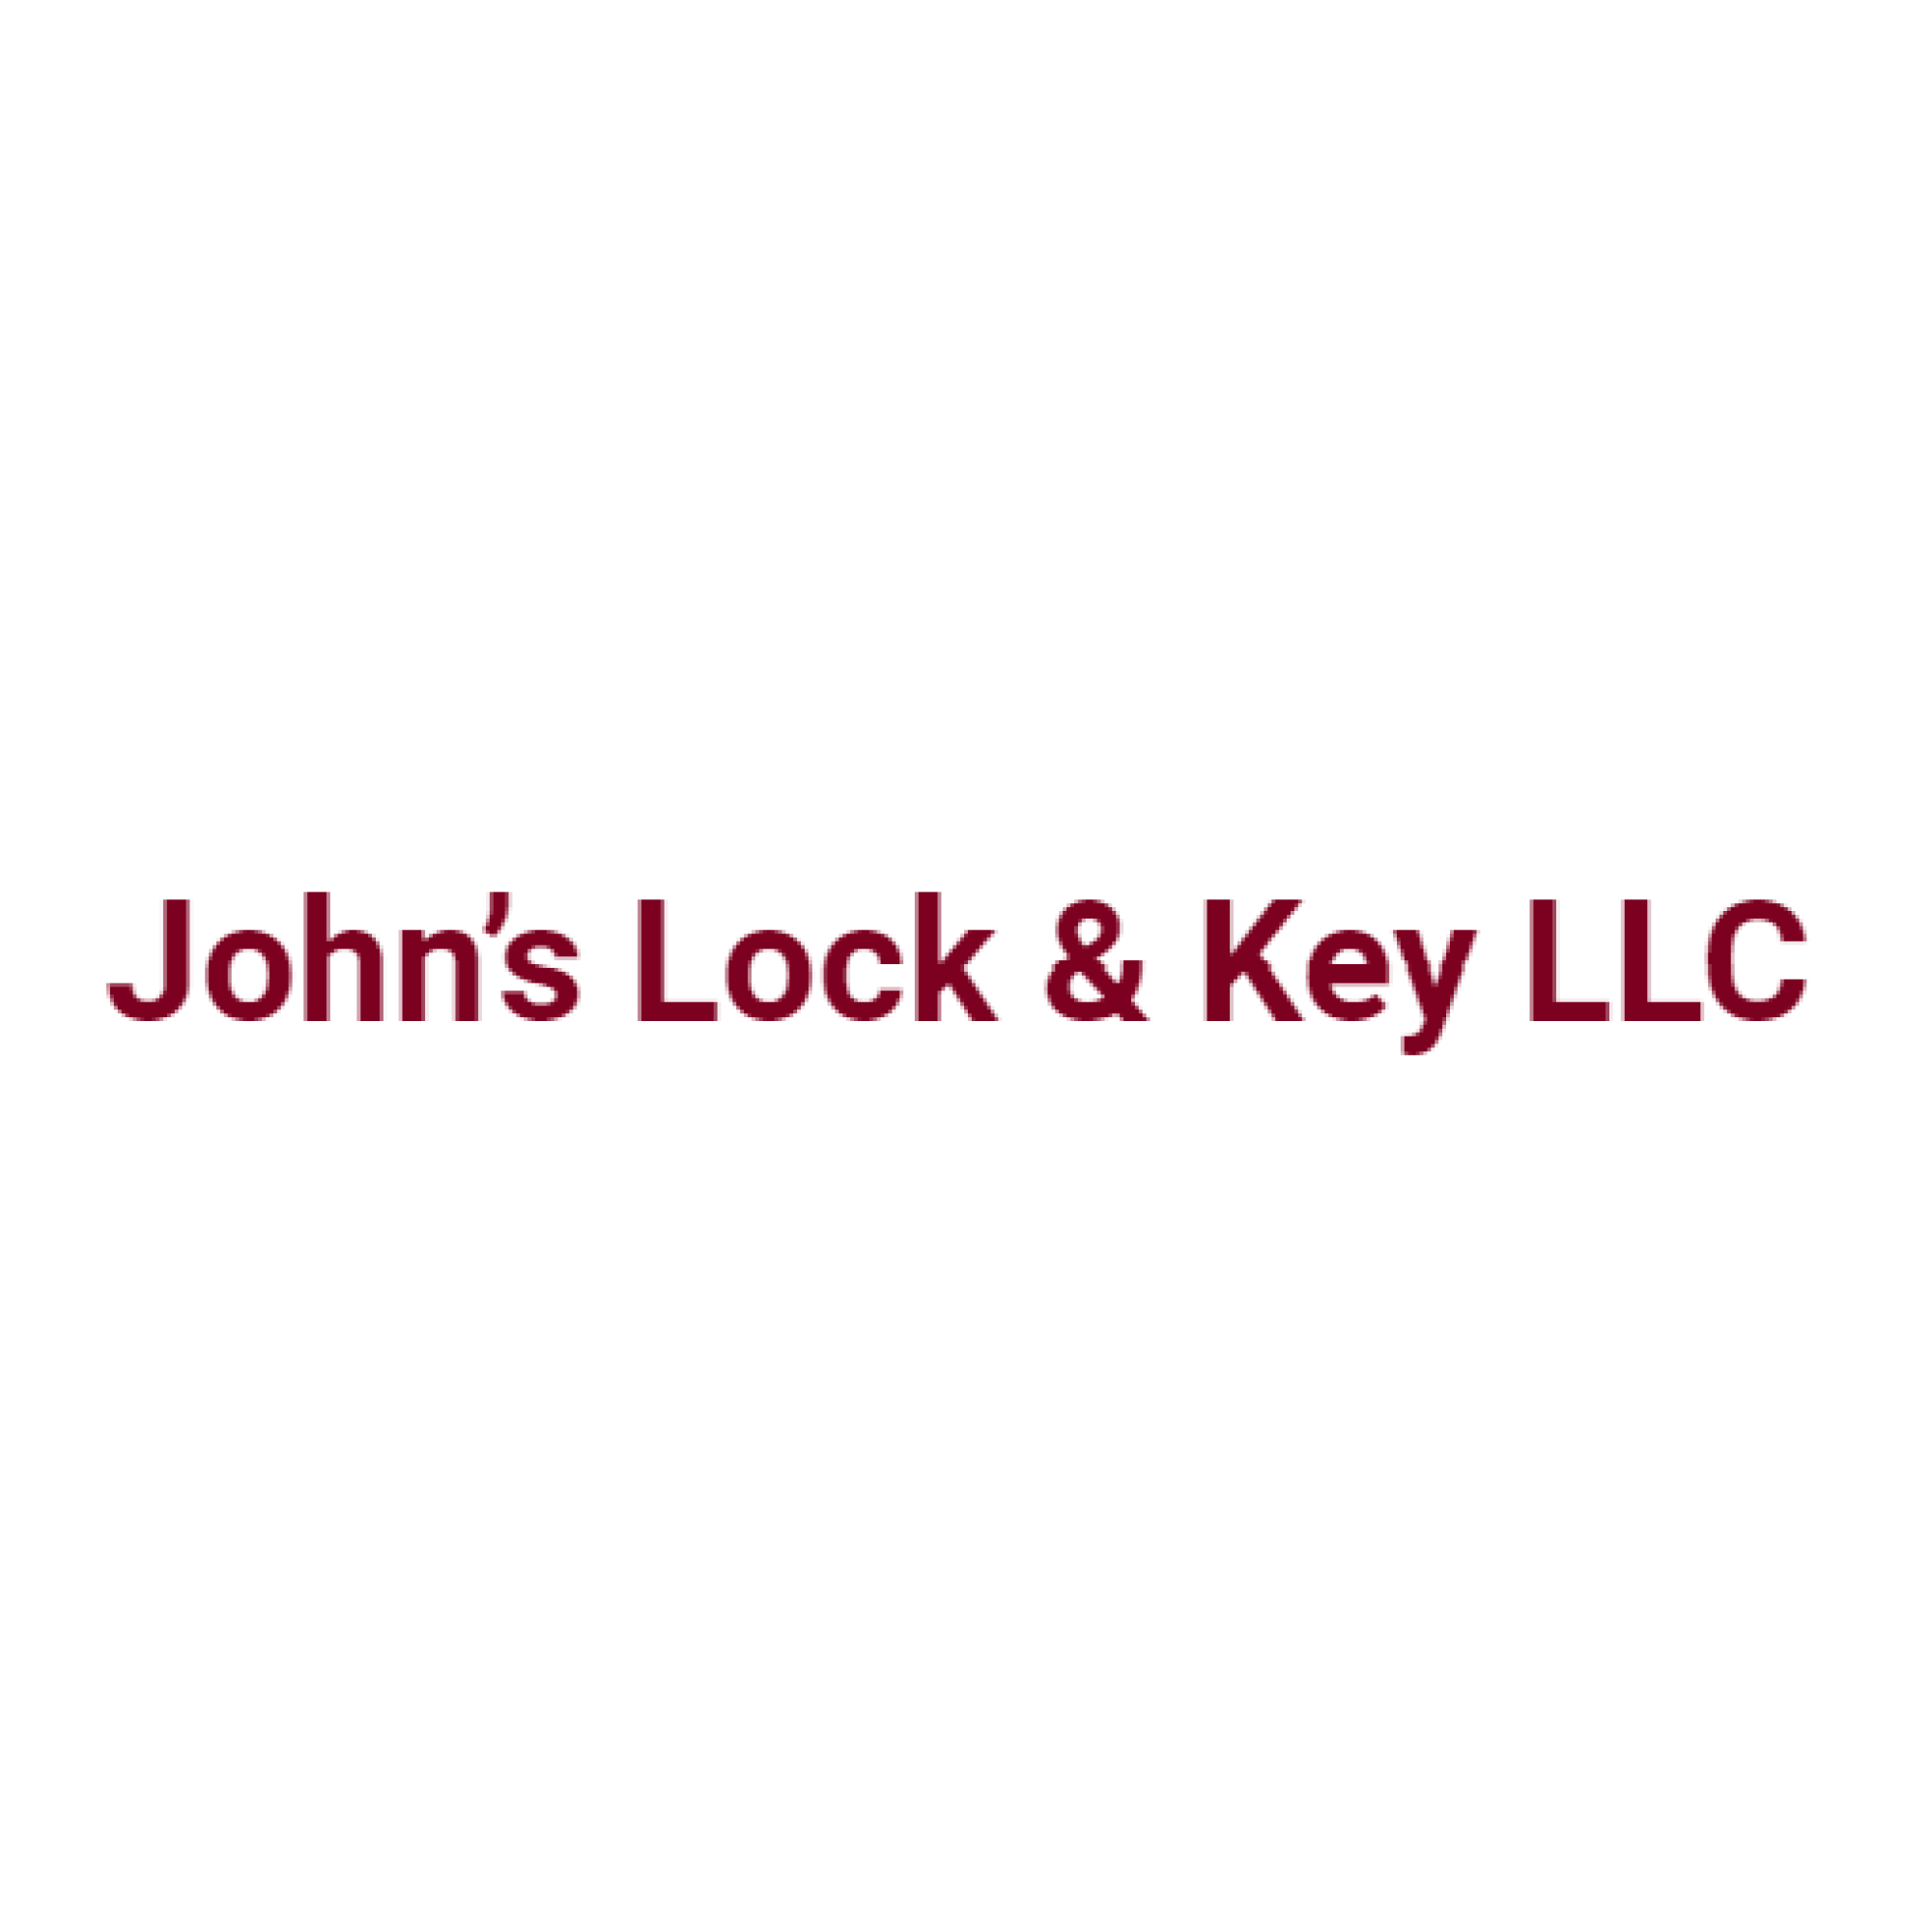 John's Lock & Key LLC